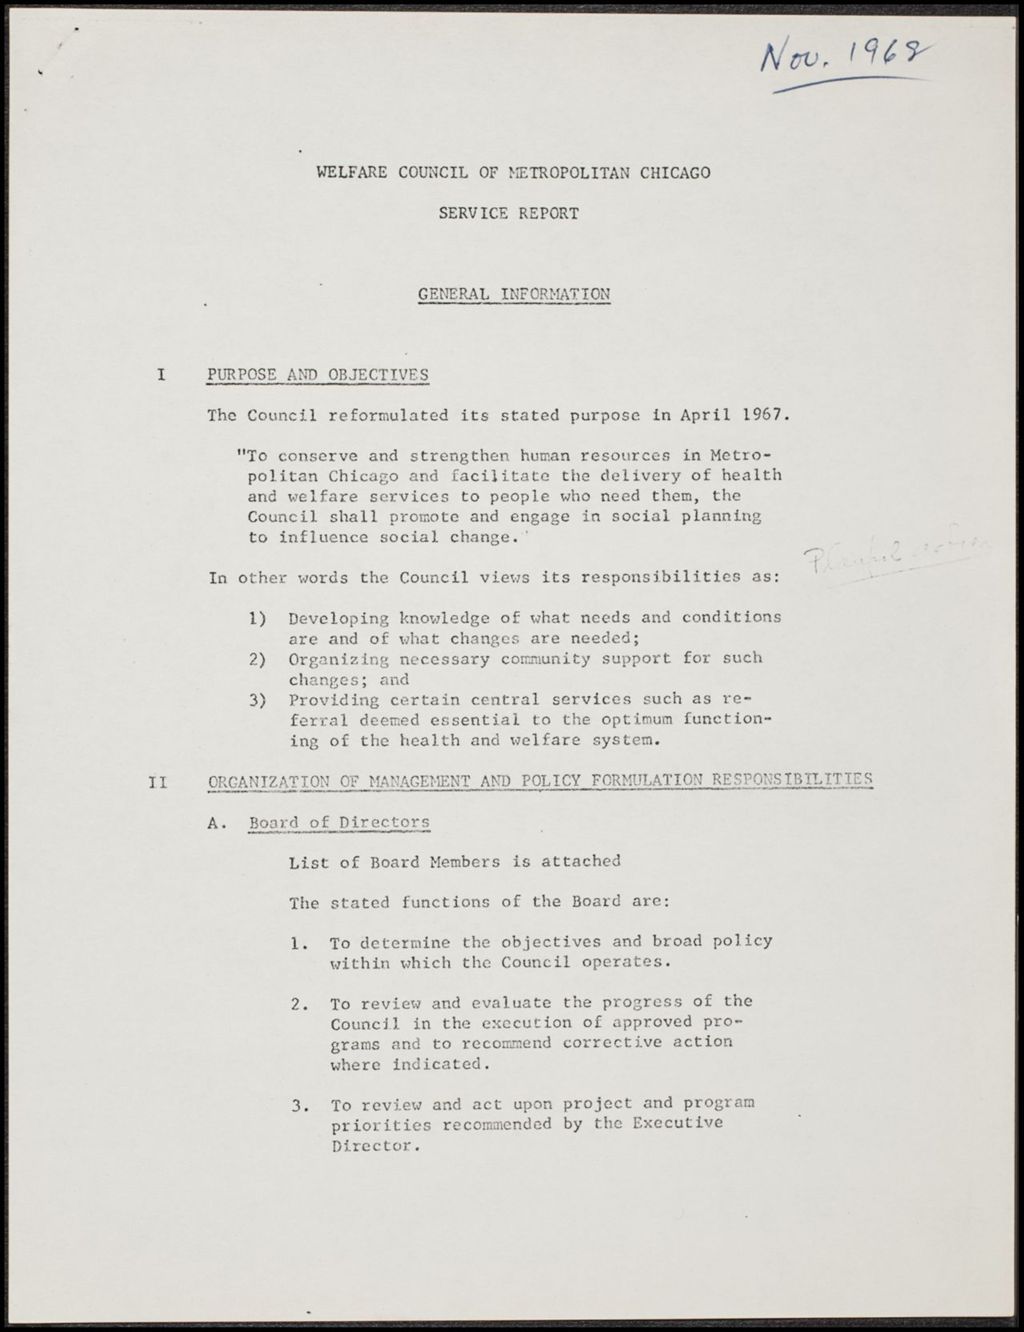 Miniature of Welfare Council - memoranda, 1970 (Folder I-3004)